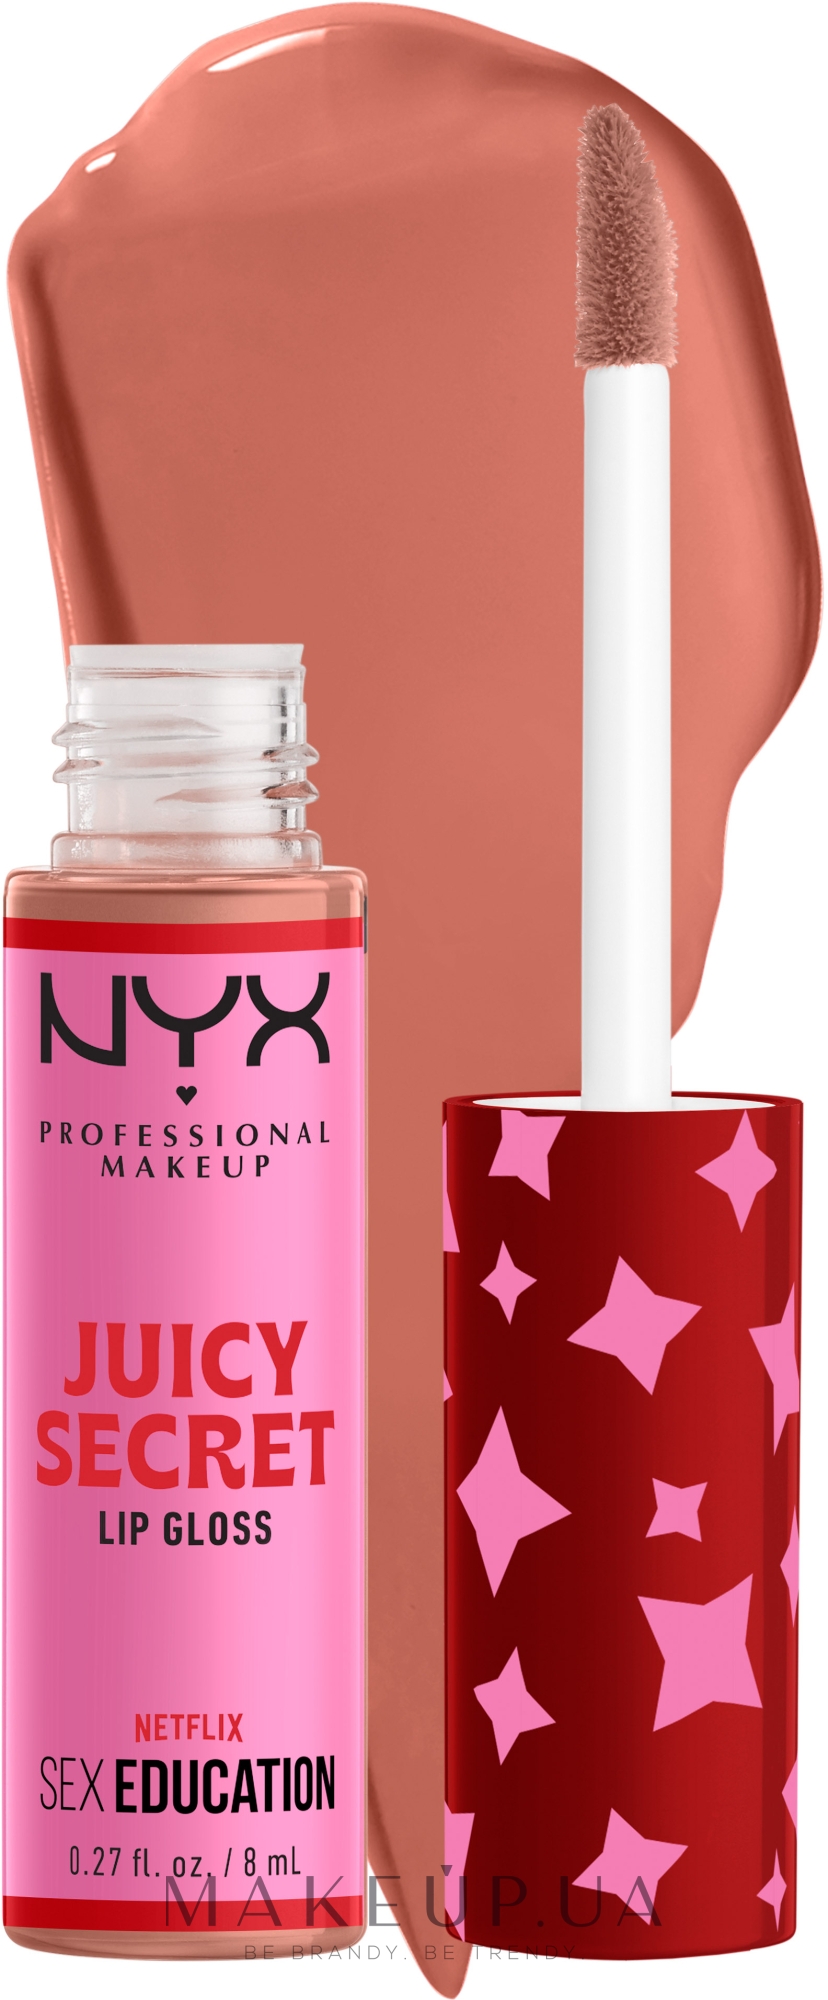 Nyx Professional Makeup Sex Education Juicy Secret Lip Gloss